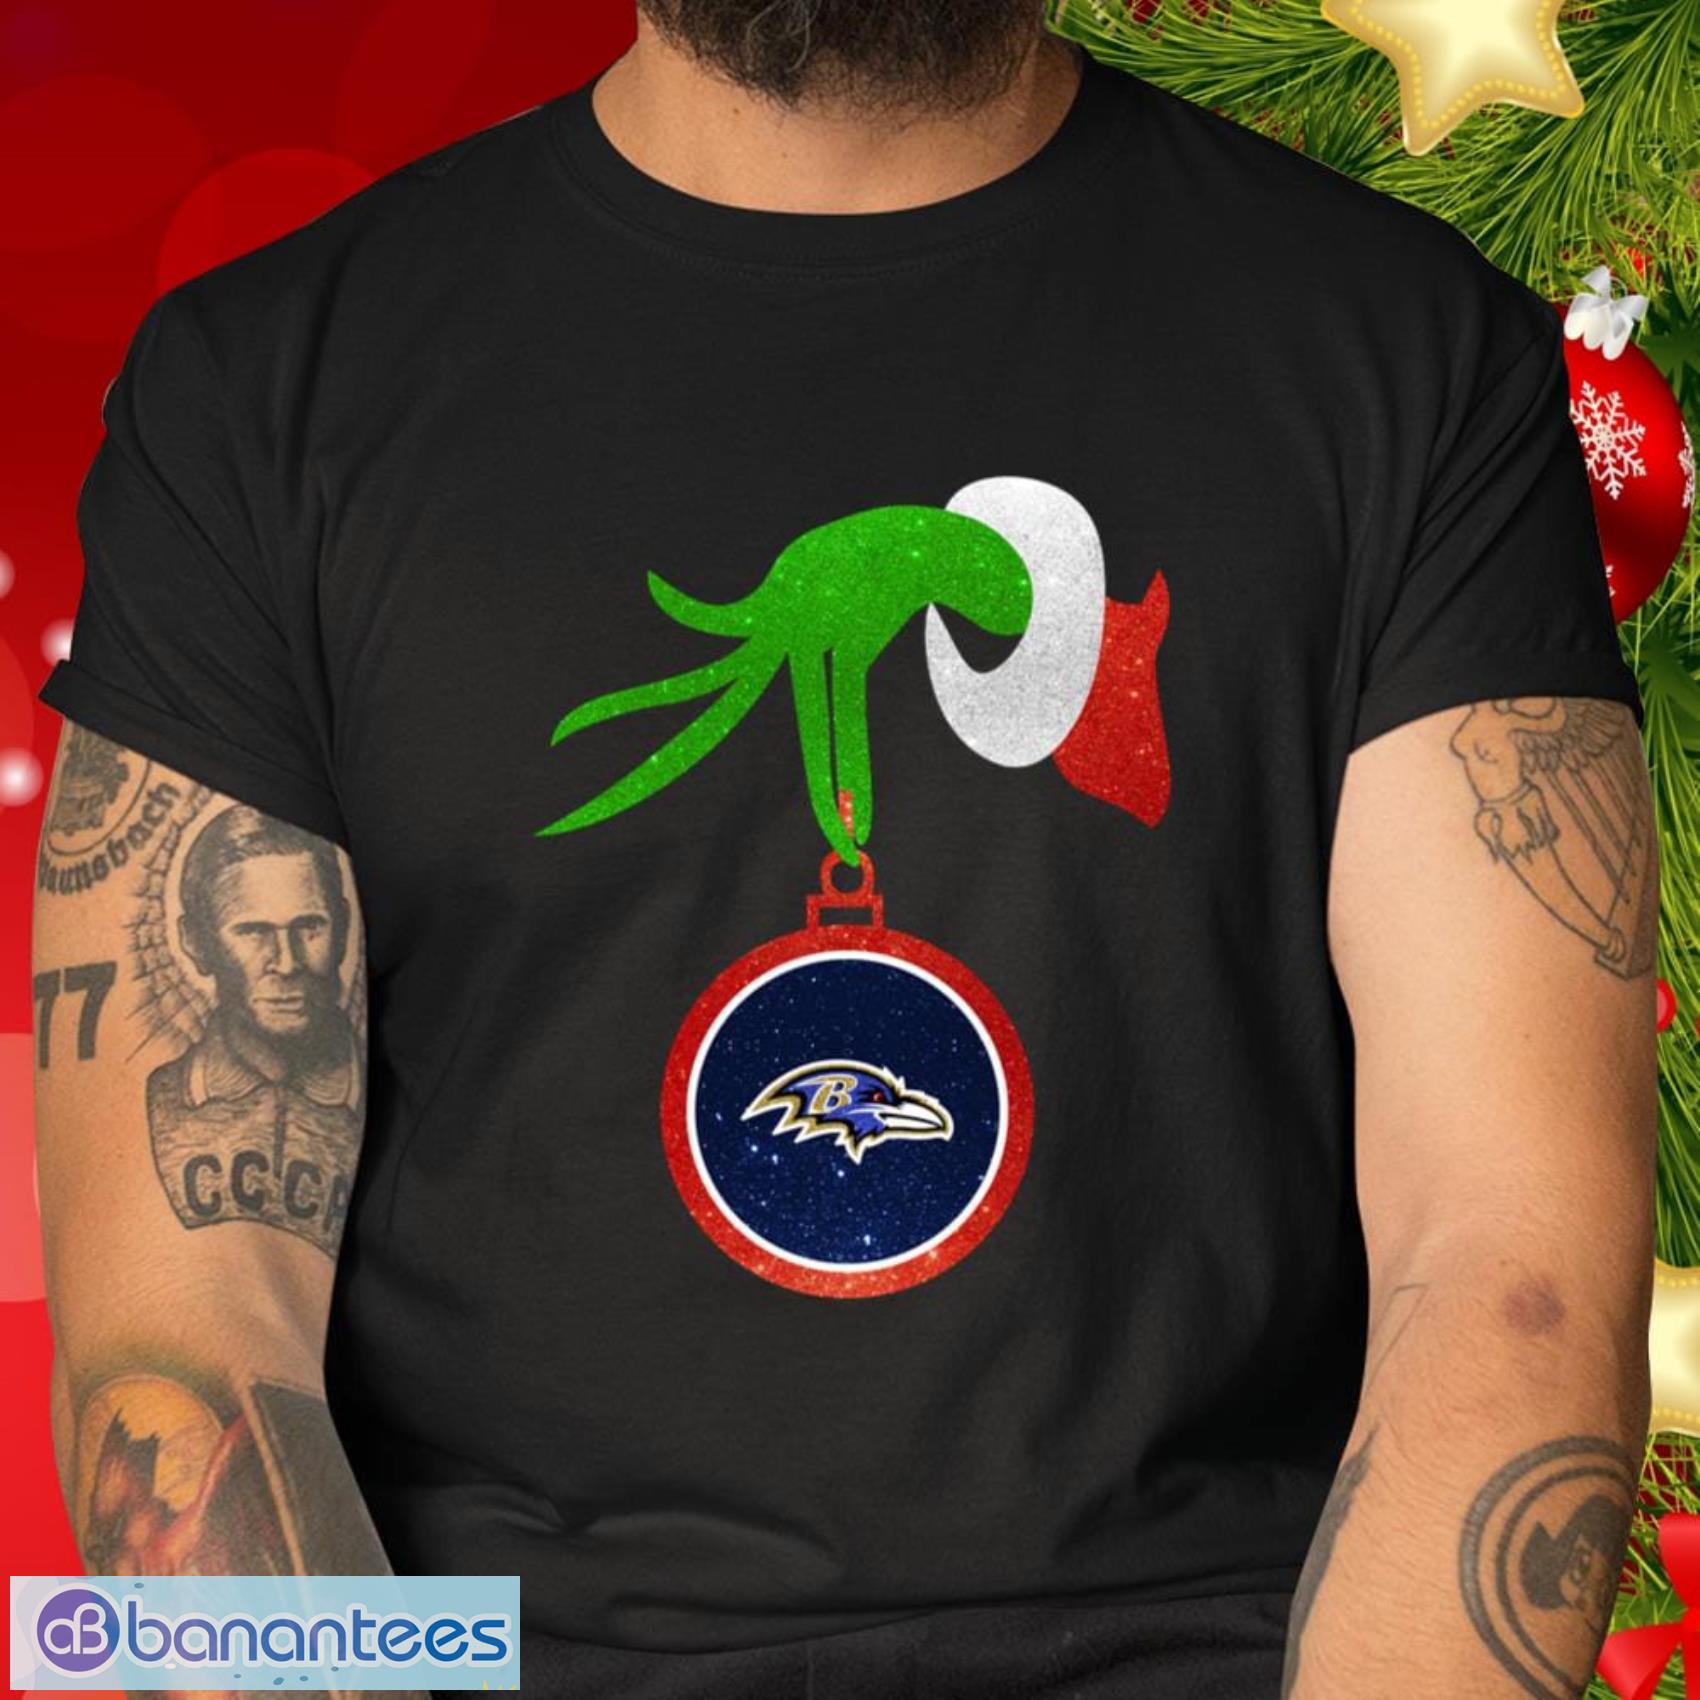 Baltimore Ravens Grinch Merry Christmas NFL Football Gift Fr Fans T Shirt - Baltimore Ravens Grinch Merry Christmas NFL Football T Shirt_1